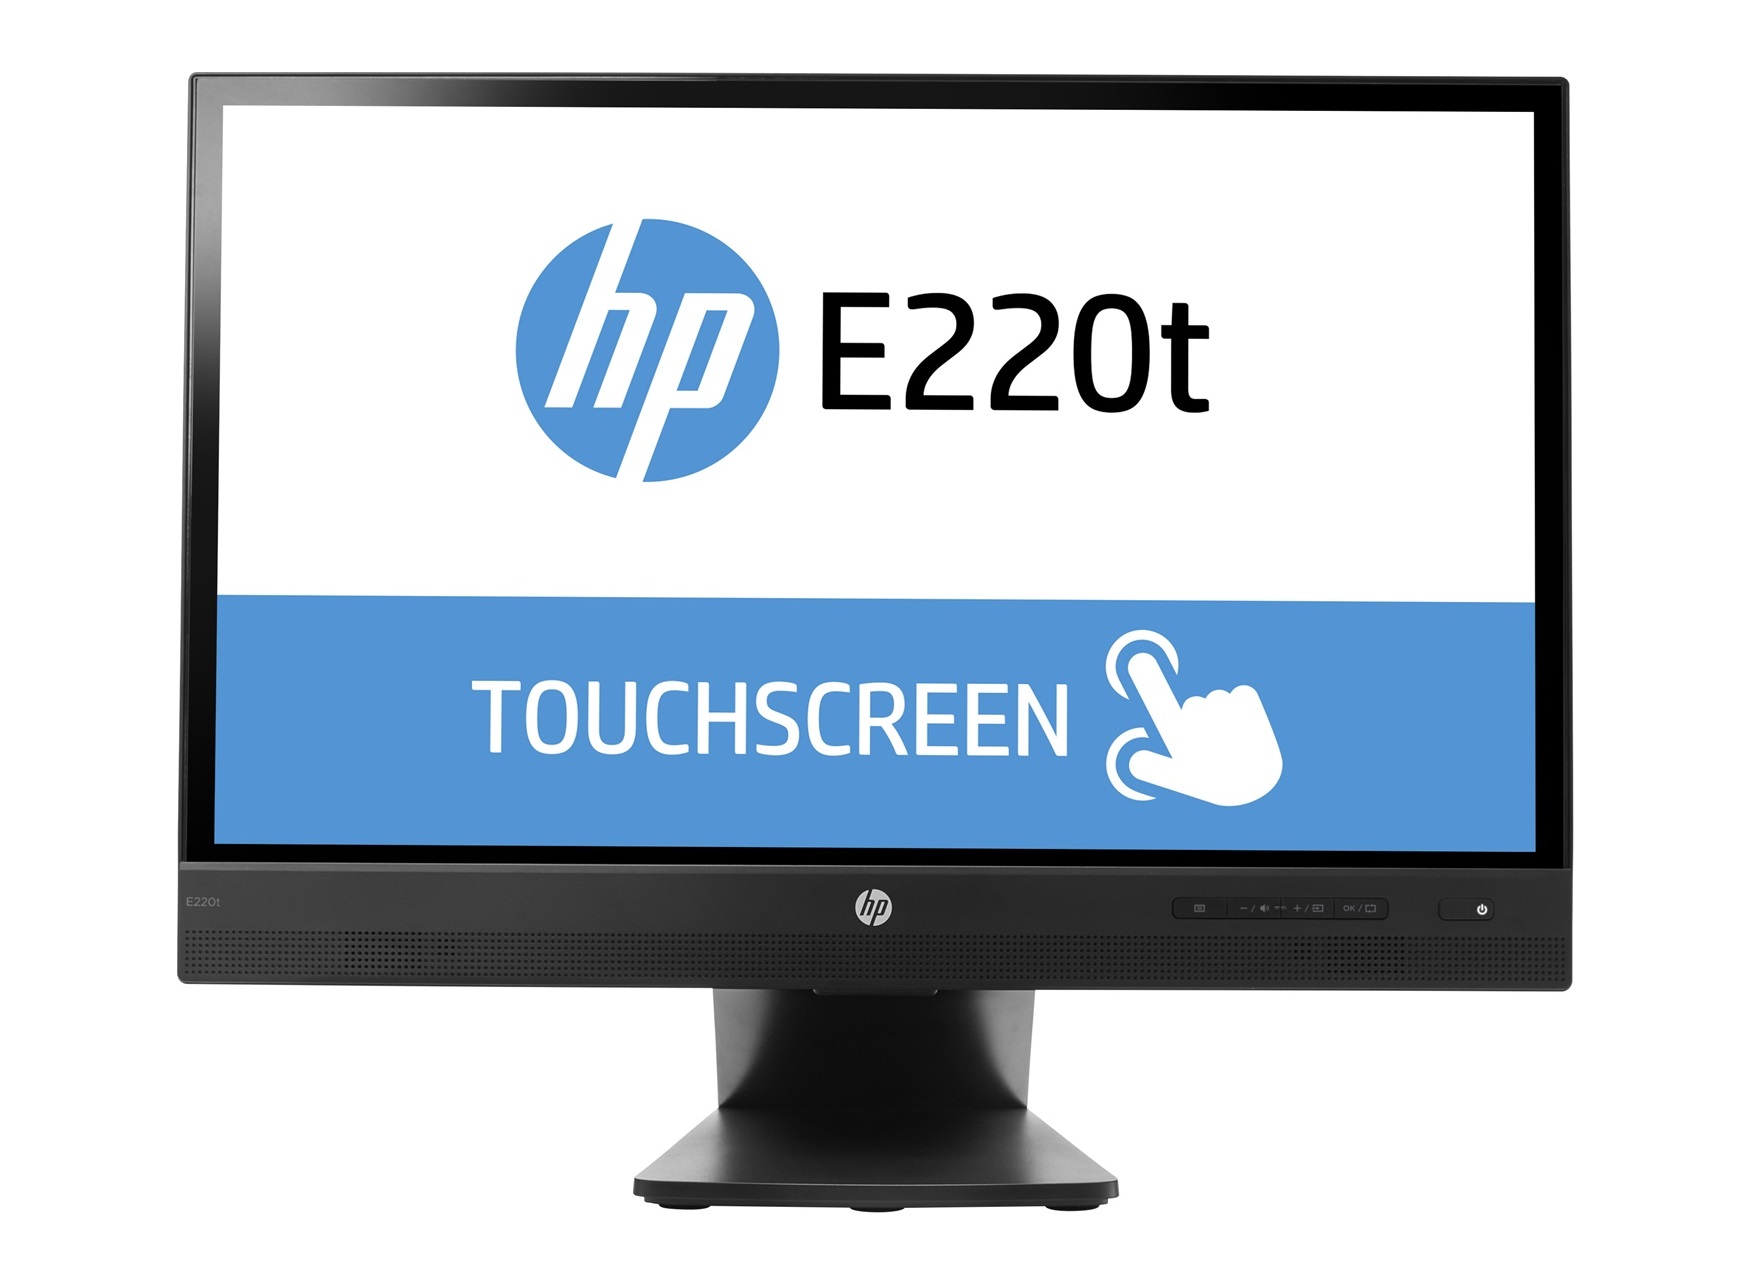 HP EliteDisplay L4Q76AA E220t LED monitor Full HD (1080p) 21.5" - Click Image to Close